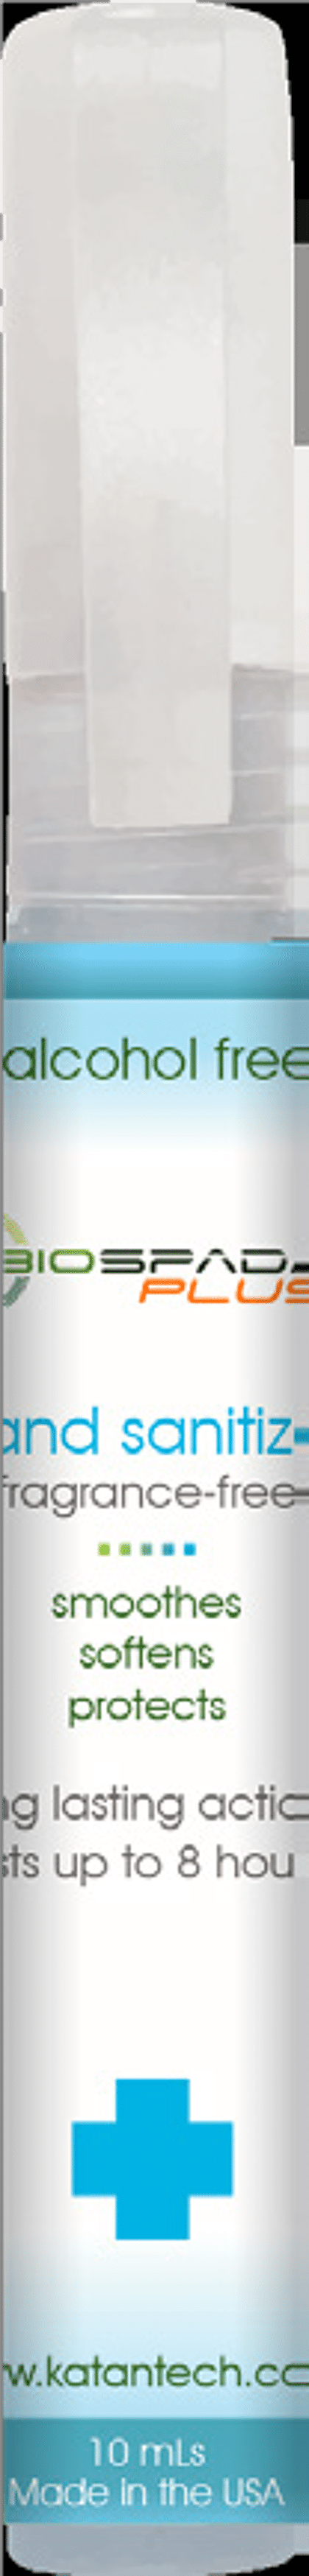 Biospada fragrance free pen